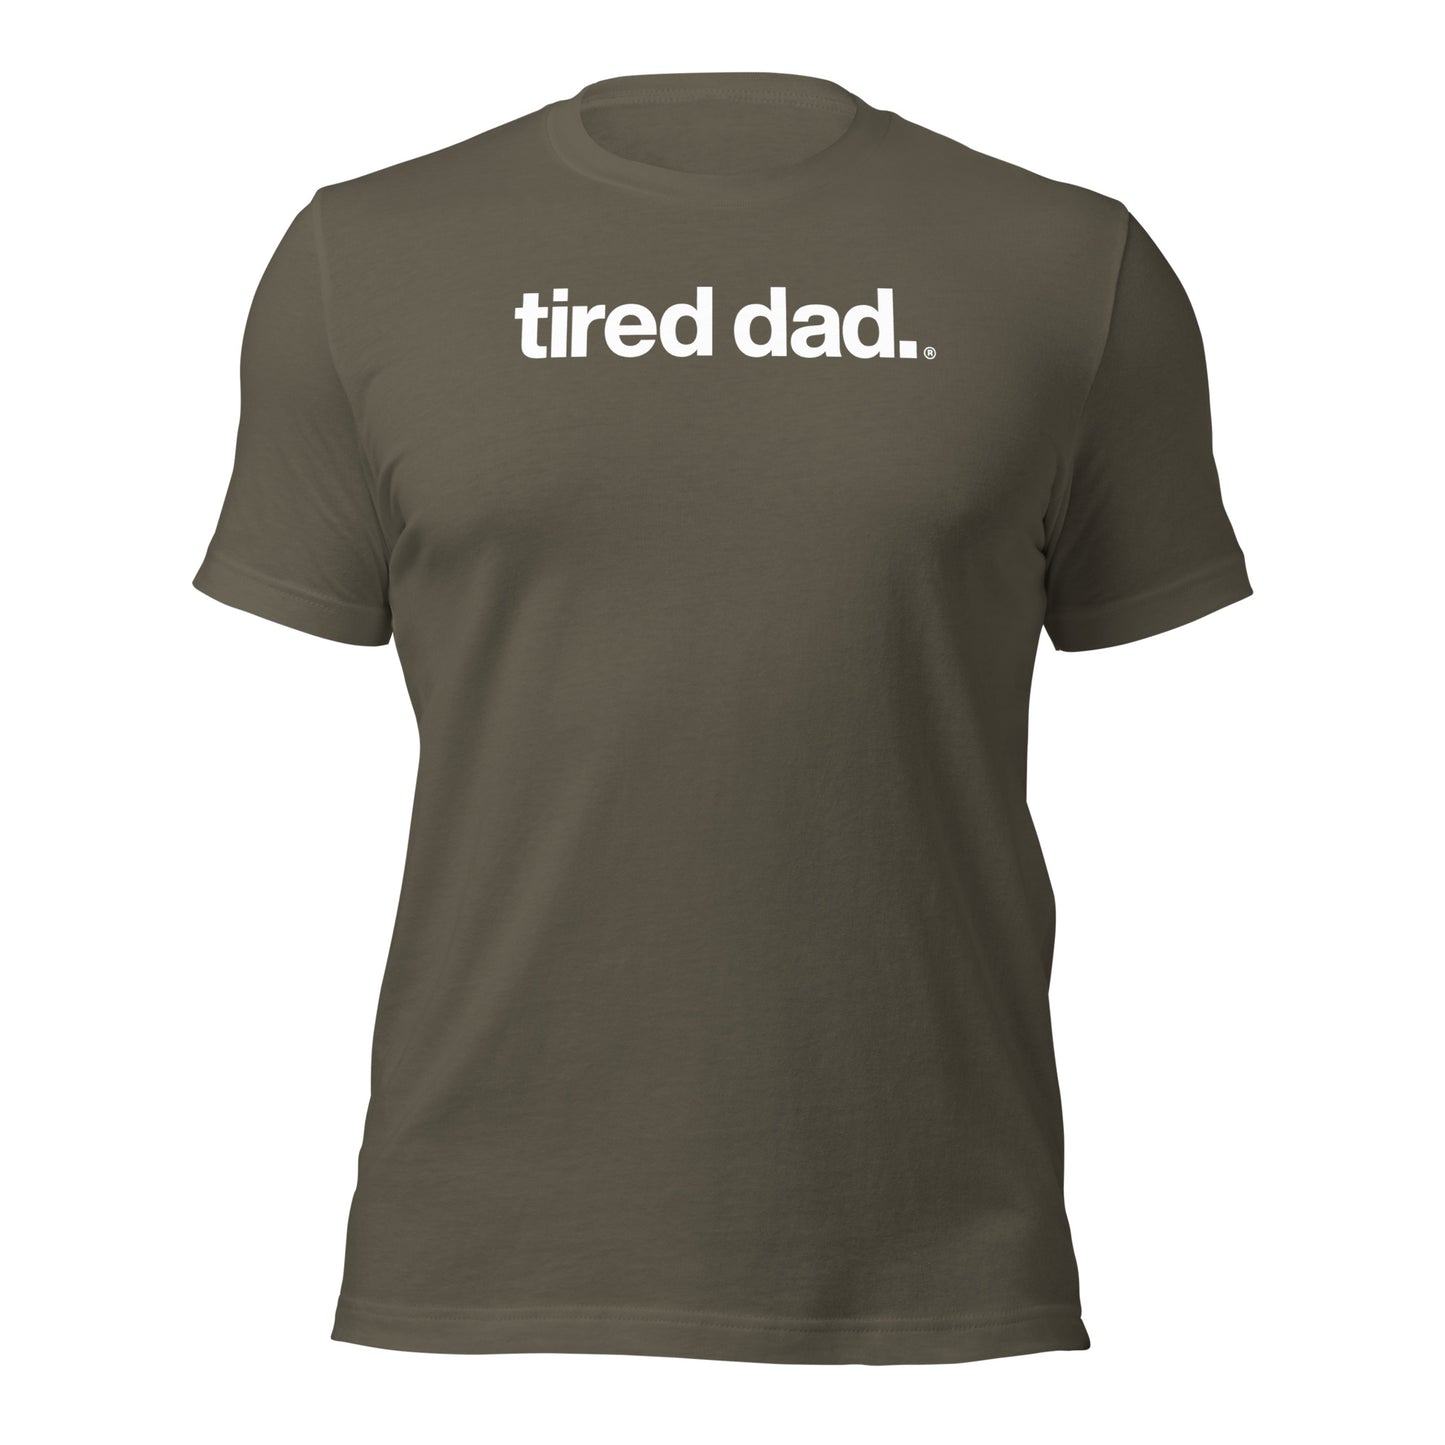 tired dad. shirt slim fit